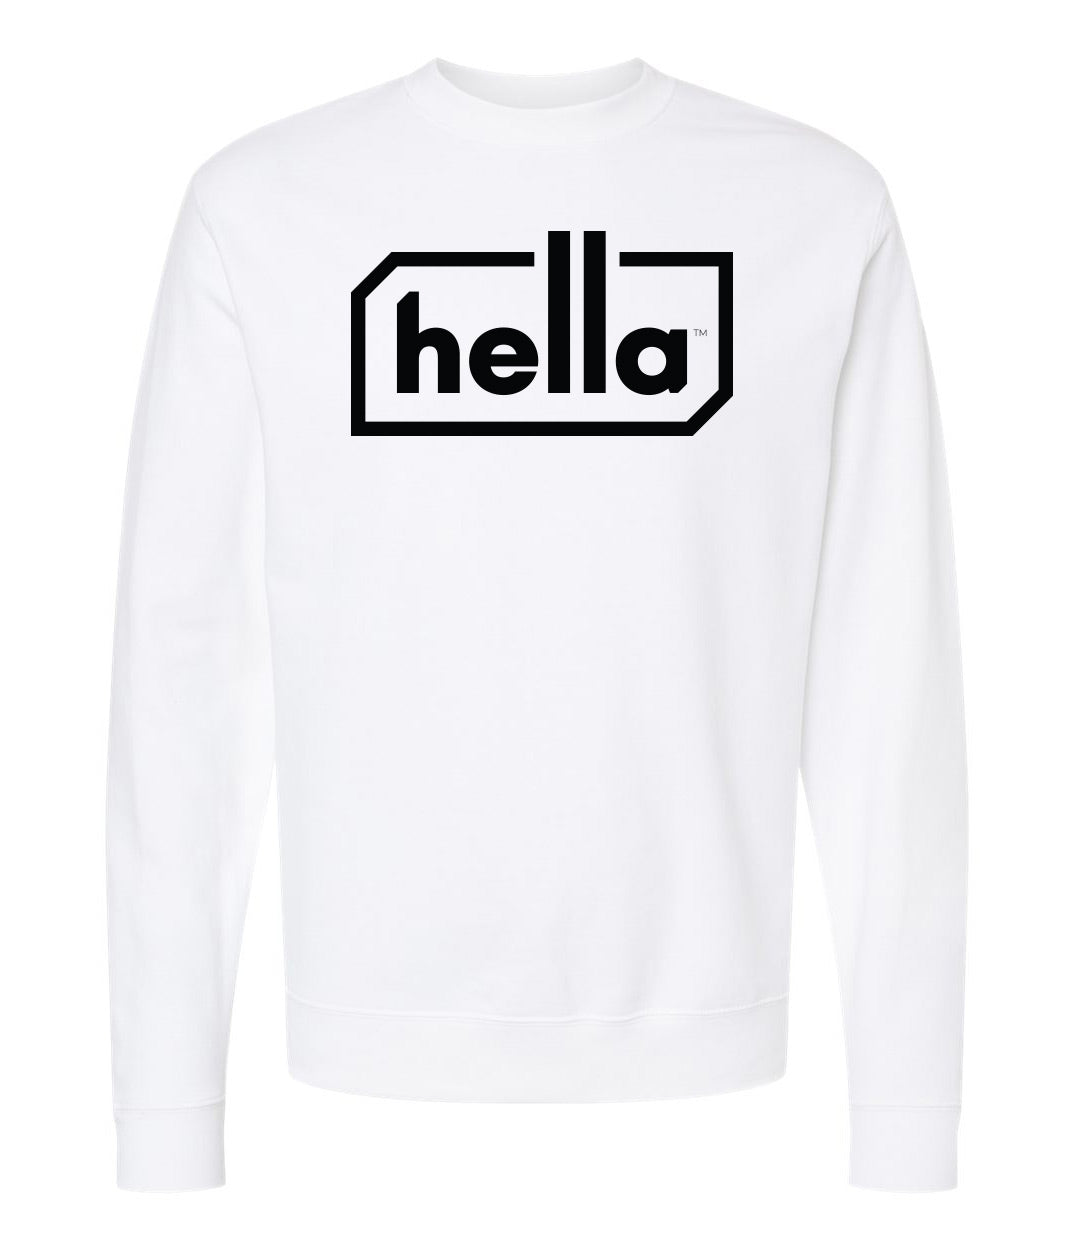 Hella Crewneck Sweatshirt